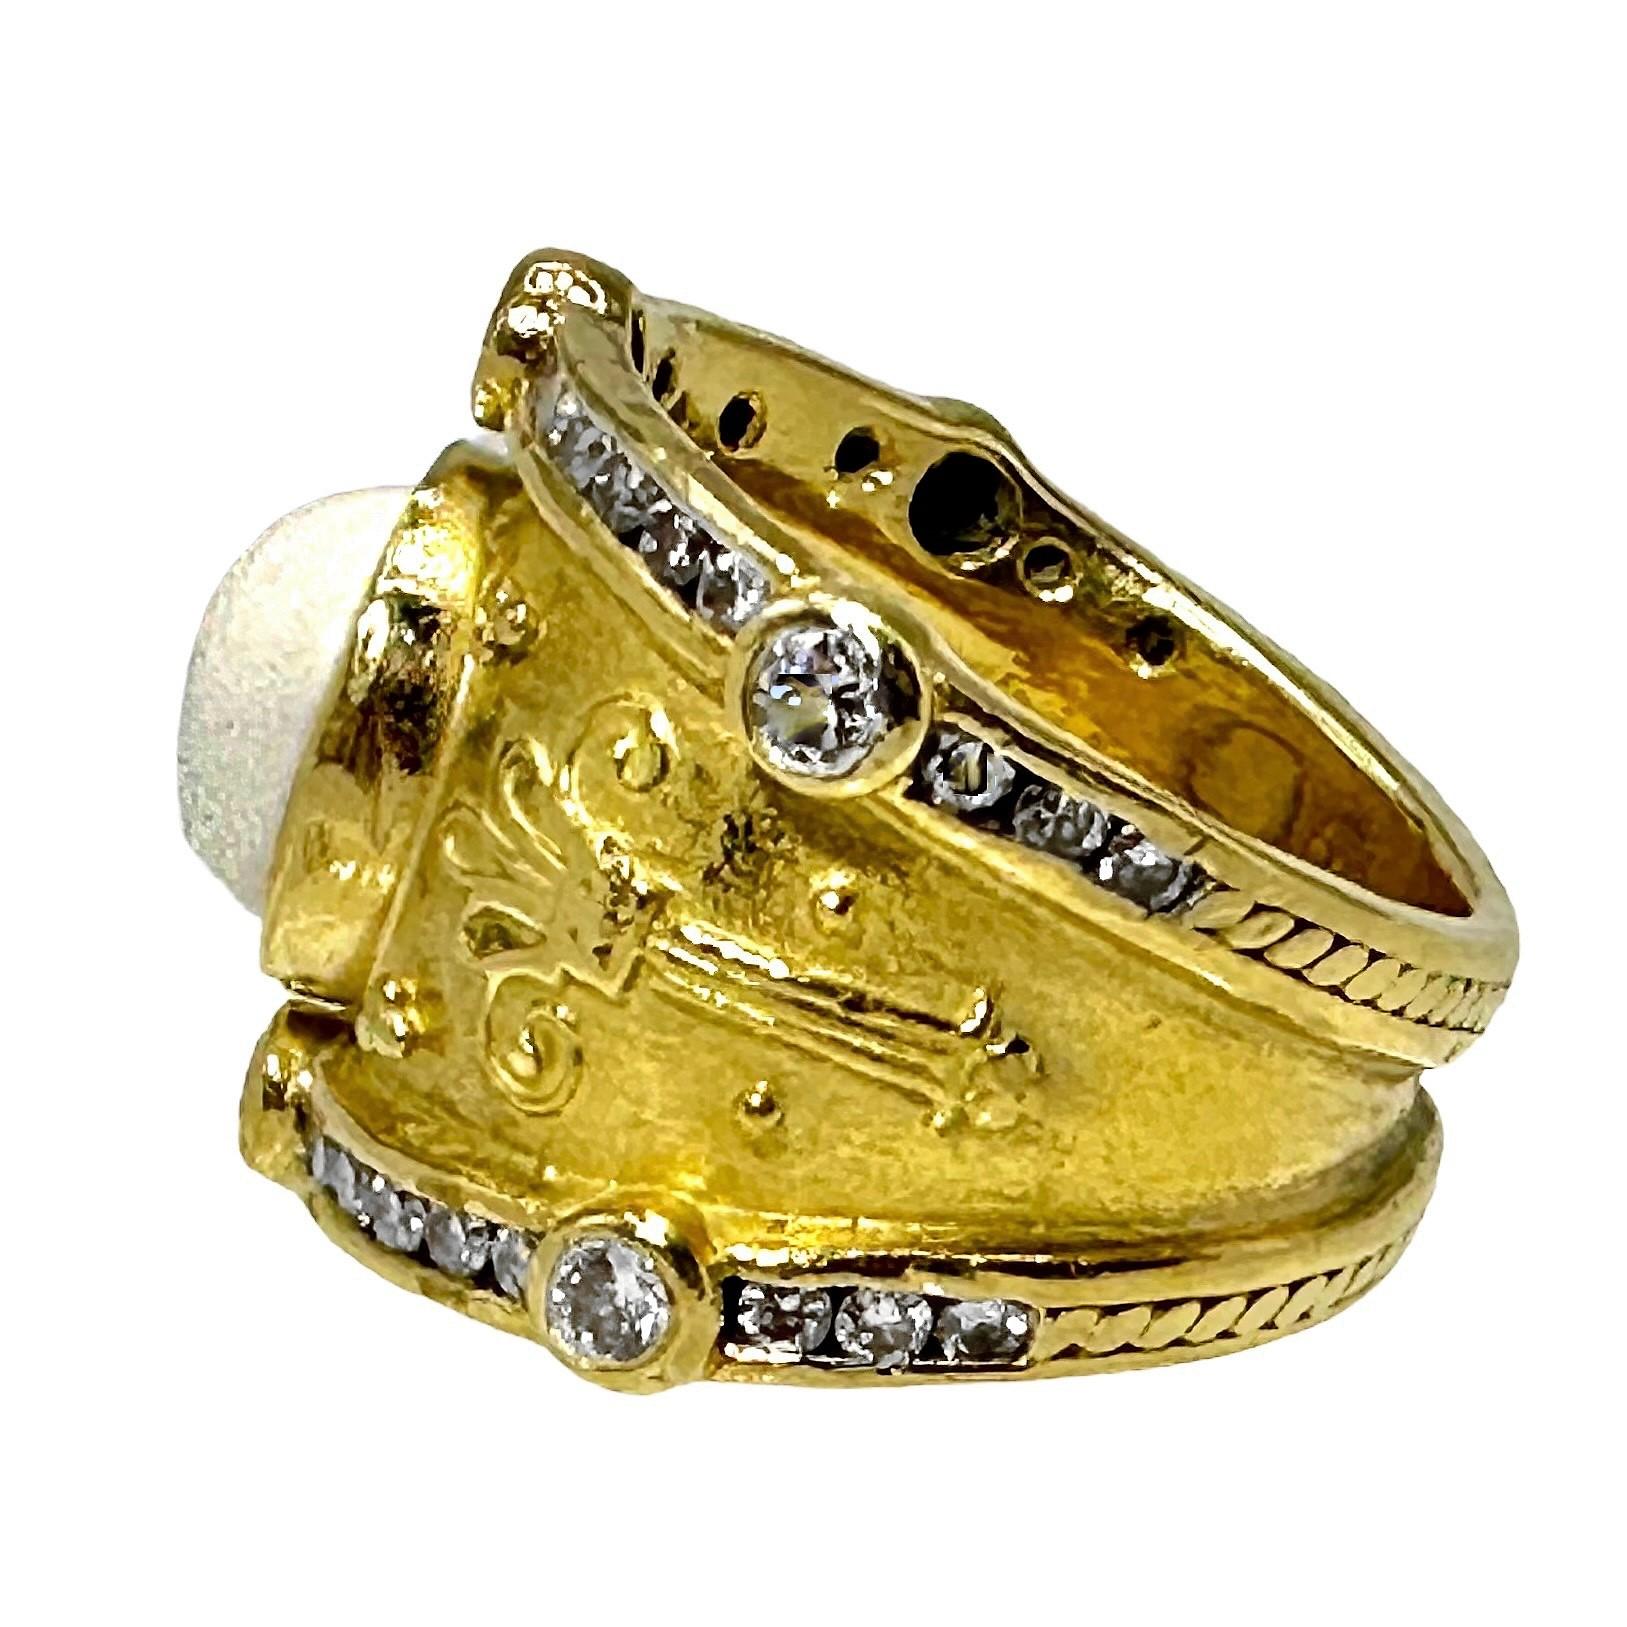 Revival Seiden Gang Gold, Diamond and White Onyx Fashion Ring